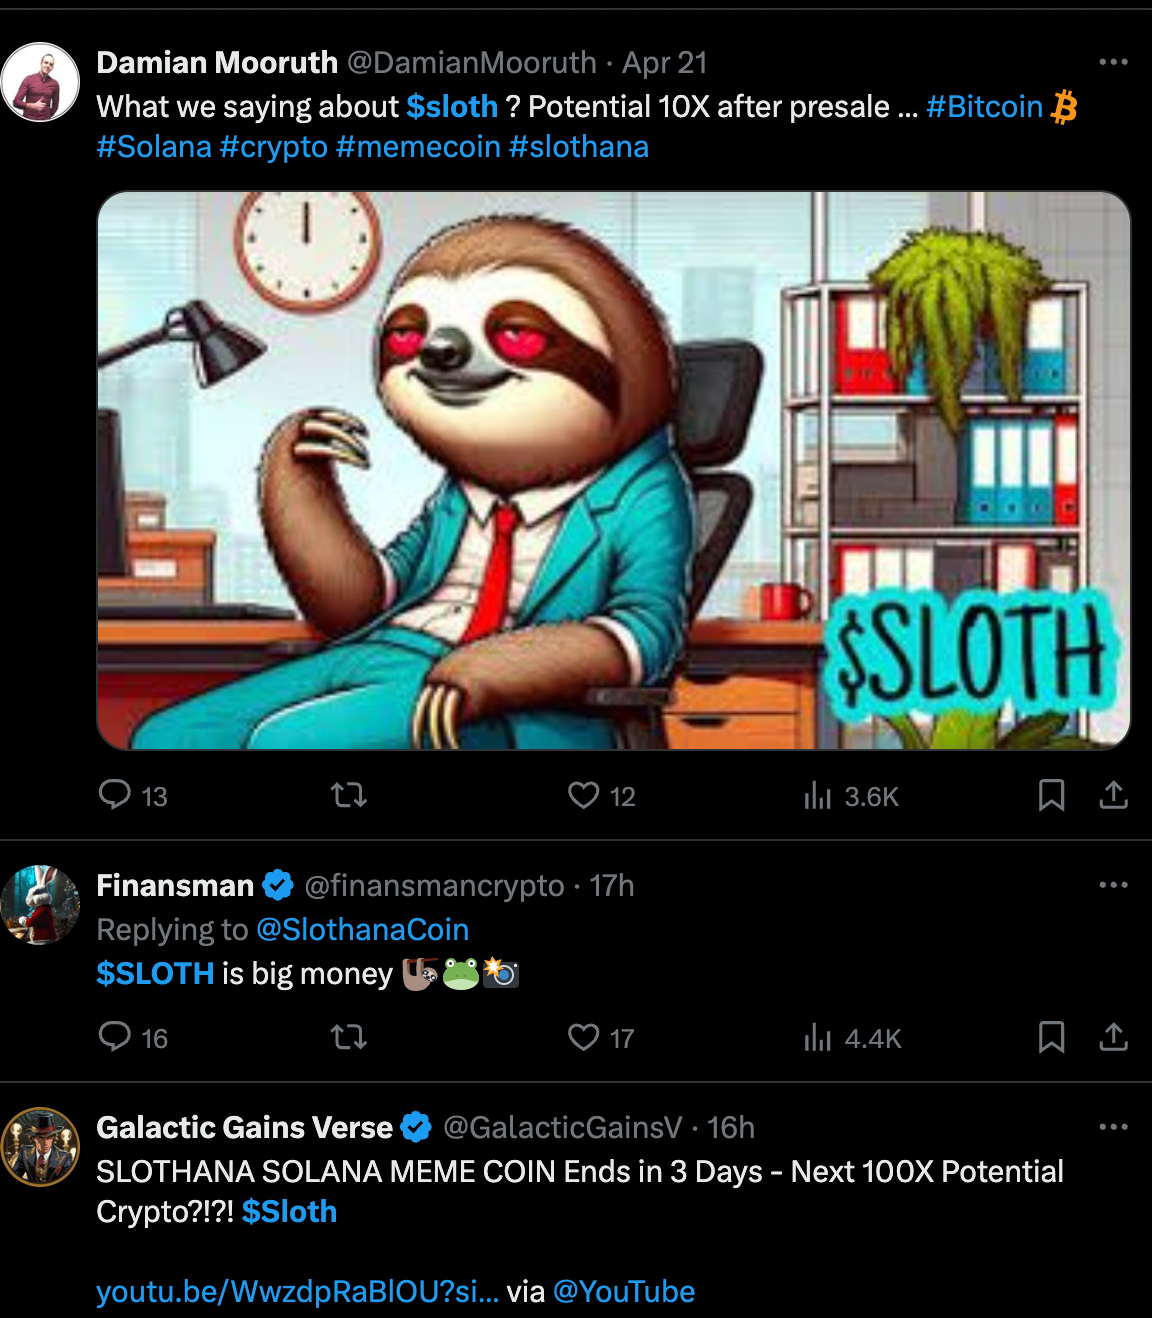 Examples on market being bullish on Sloth